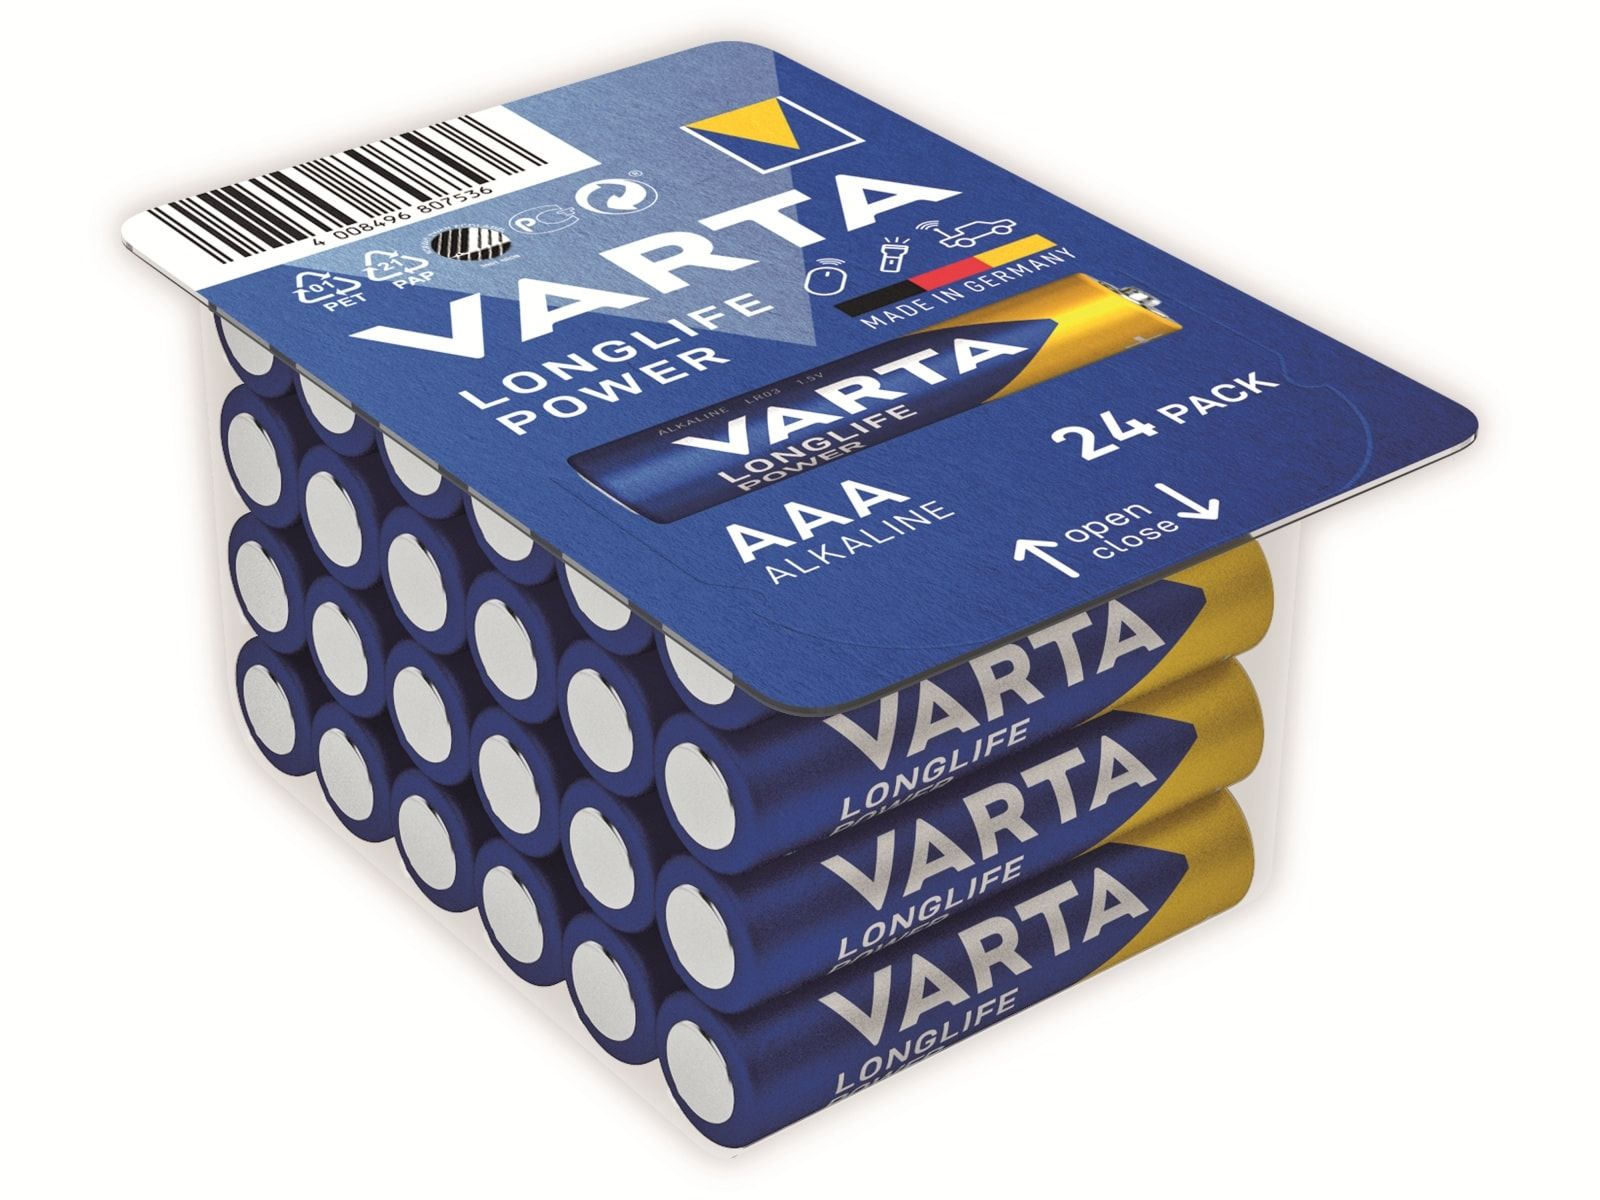 VARTA Longlife Power Micro AAA Ah (24er) 1.5 AlMn AlMn, Batterie, Batterie 1.26 Box Volt, LR03 4703 Big